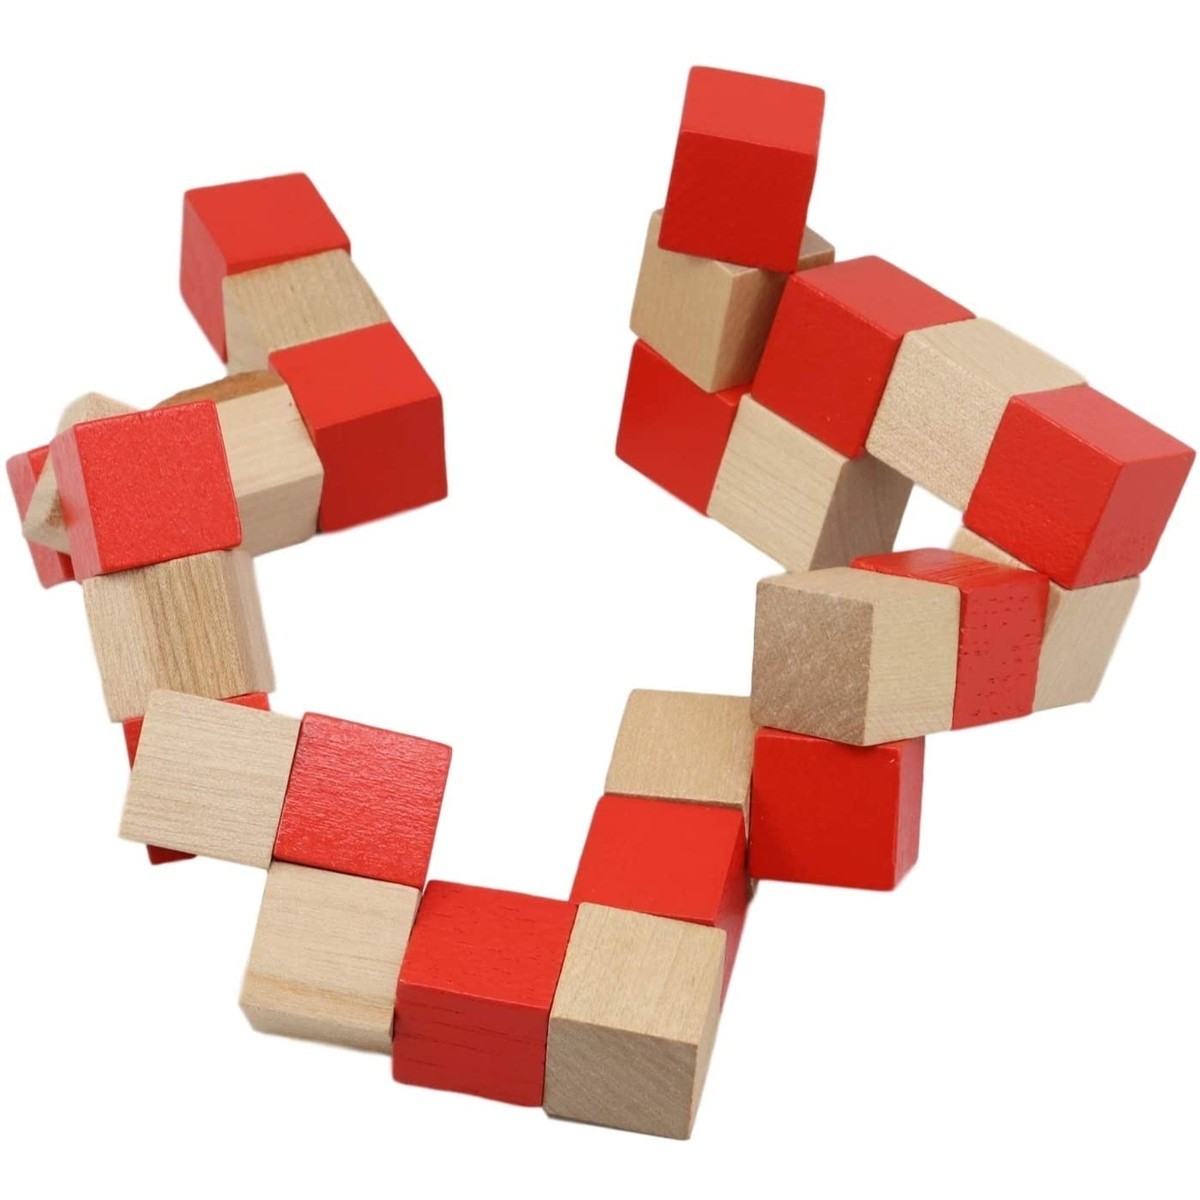  Frank Lloyd light 3D puzzle Cube objet d'art Frank Lloyd Wright ornament wooden wood . what . construction 